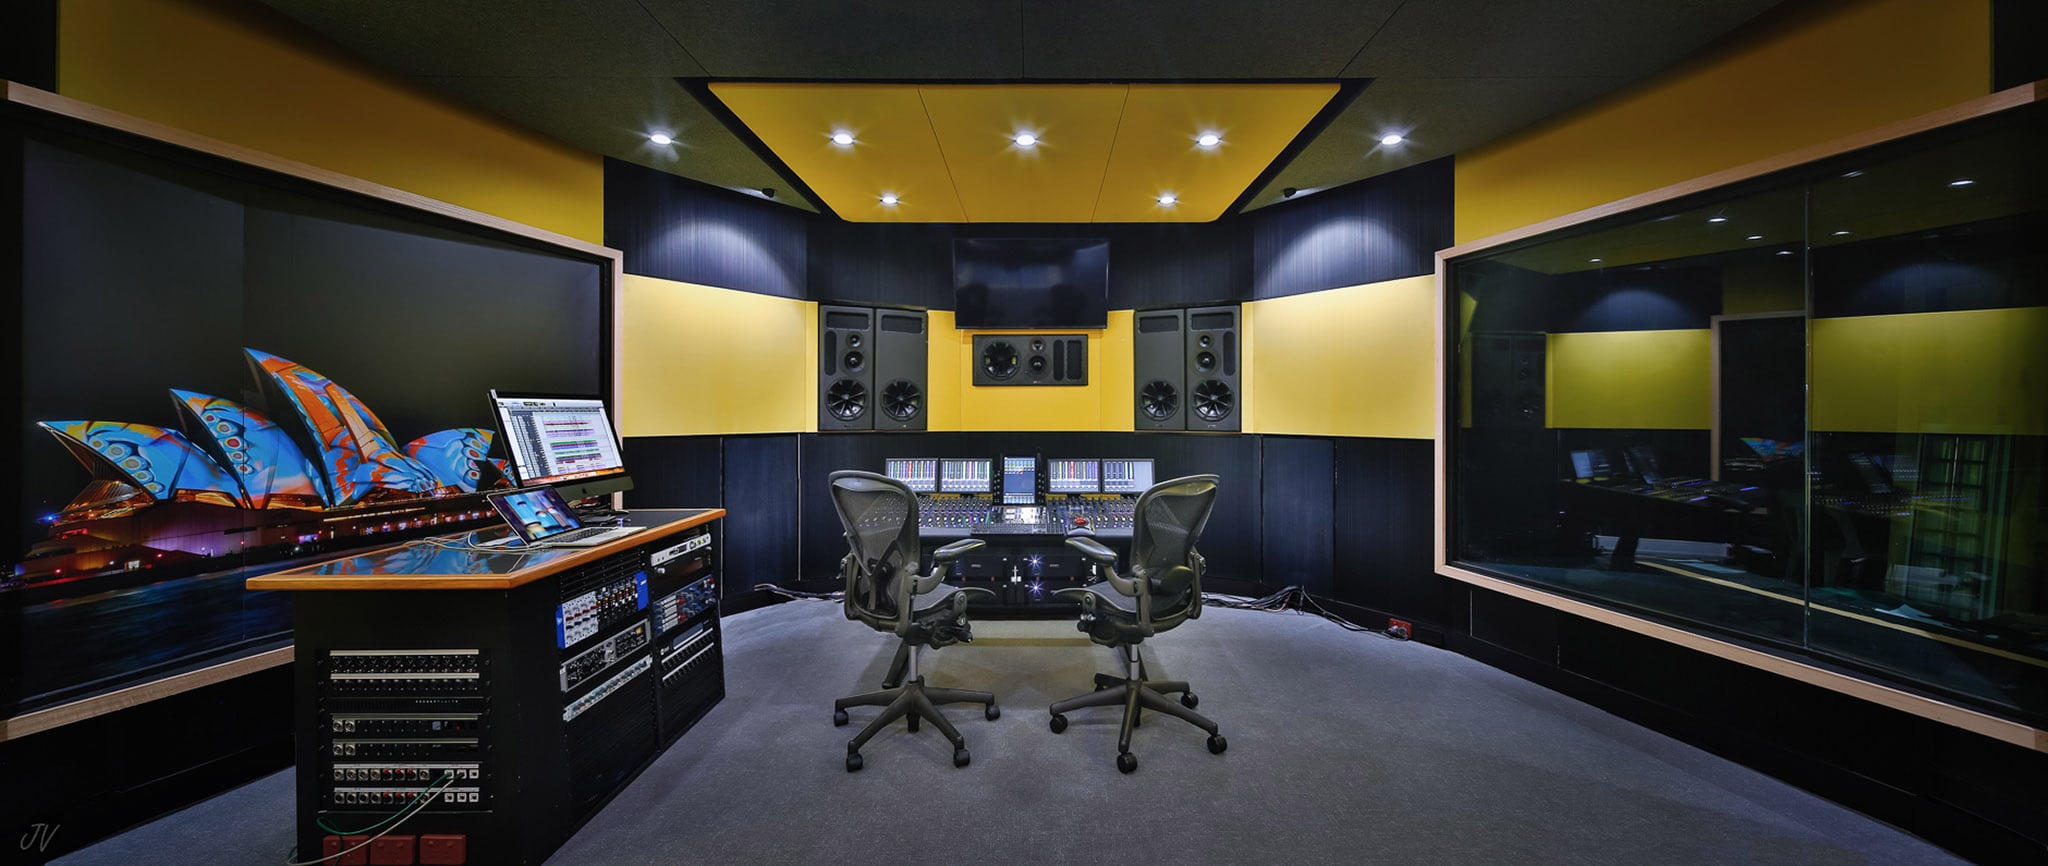 Studio 3 Control Room - Post Production Sydney